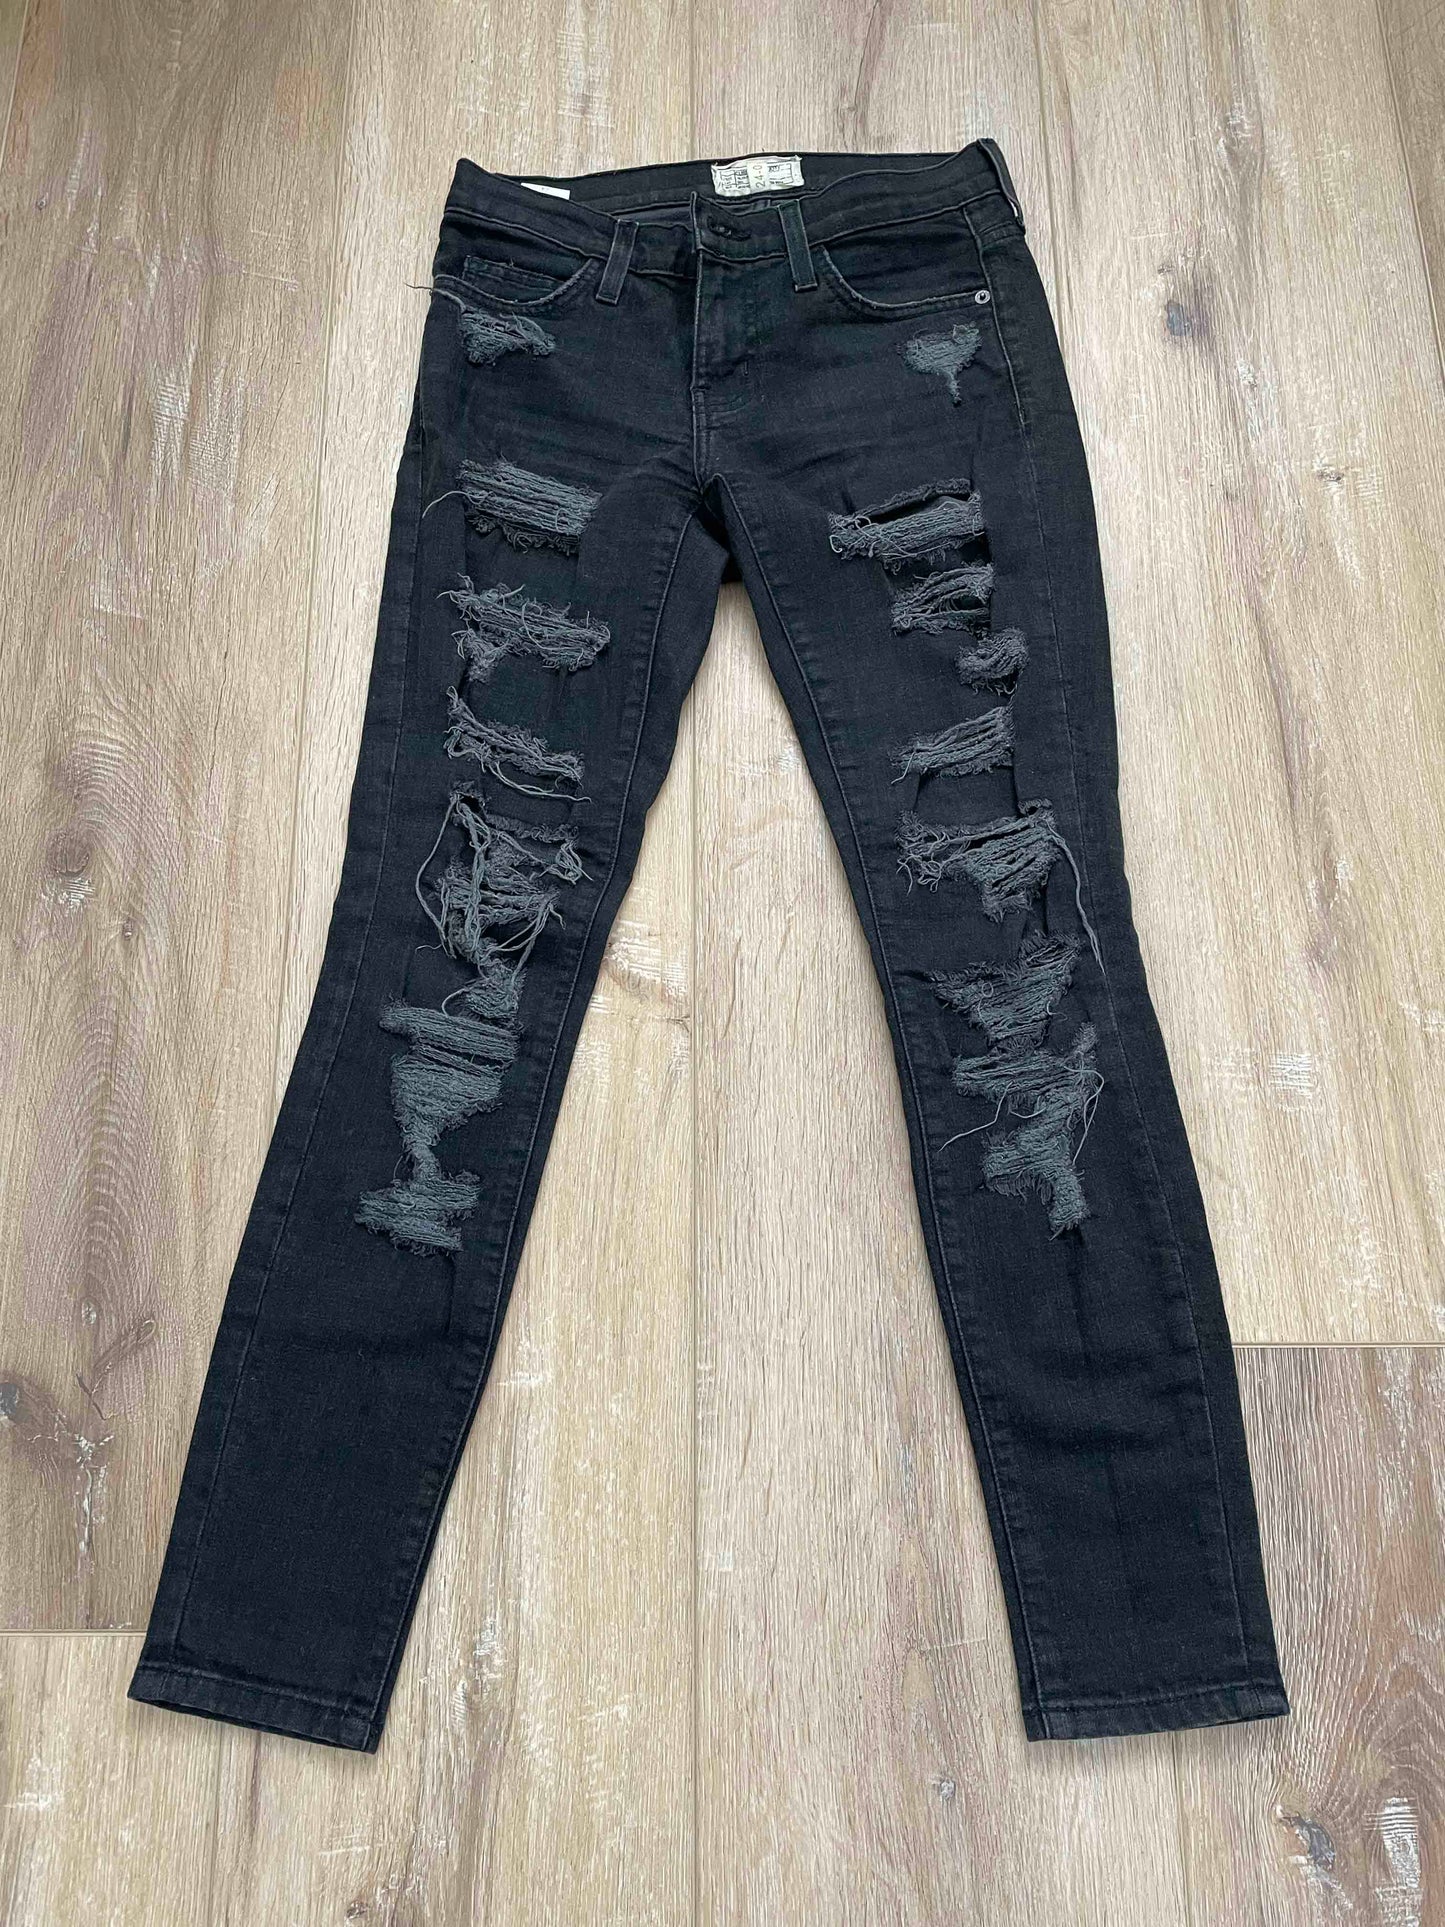 Current Elliot Black Distressed Jeans, 24